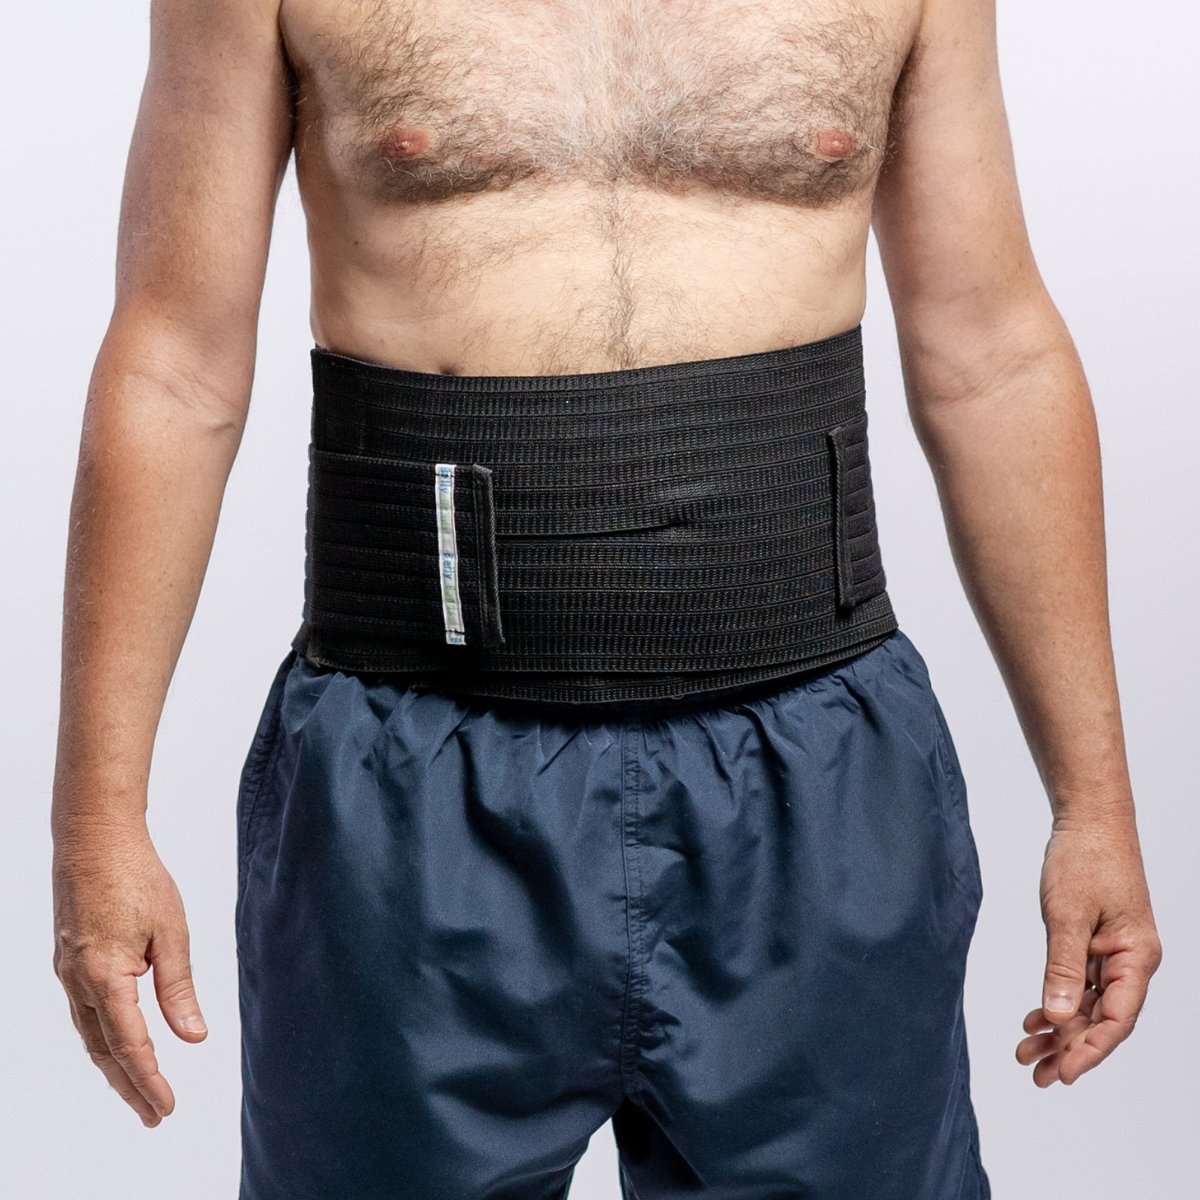 Abdominal Binder | Belly Band Stomach Hernia Support Brace & Back Support  Belt